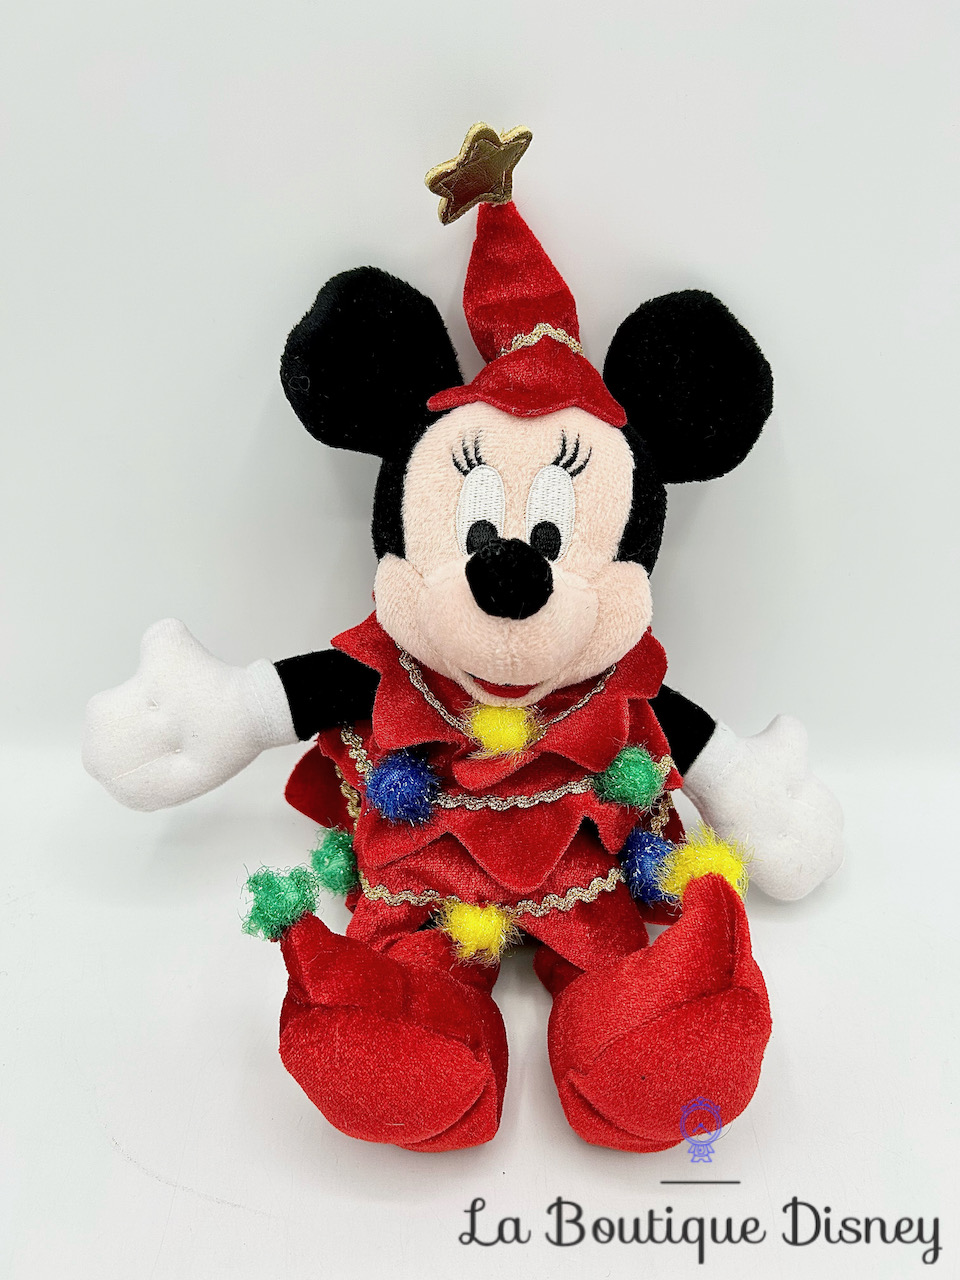 Peluche Mickey Spéciale Noël (Disney Exclusive) – AddictoPop